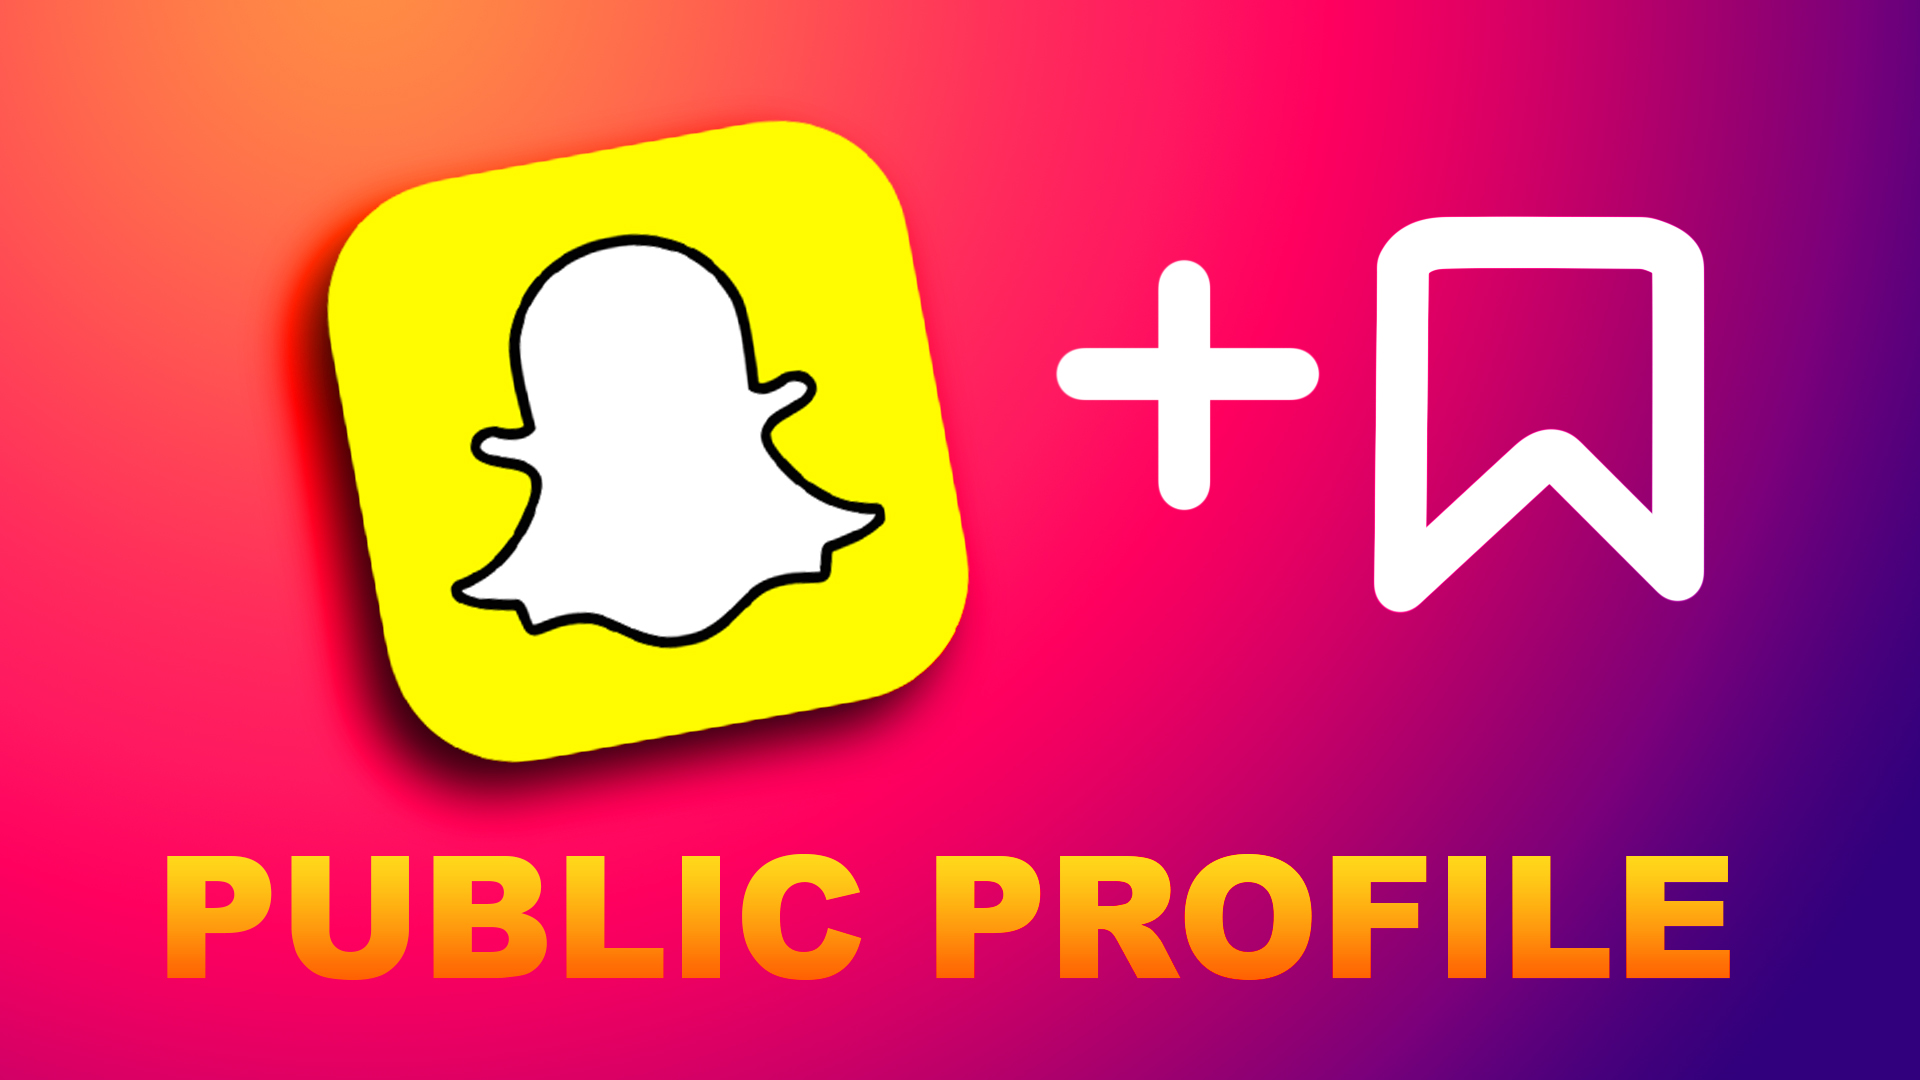 Public Profile on Snapchat